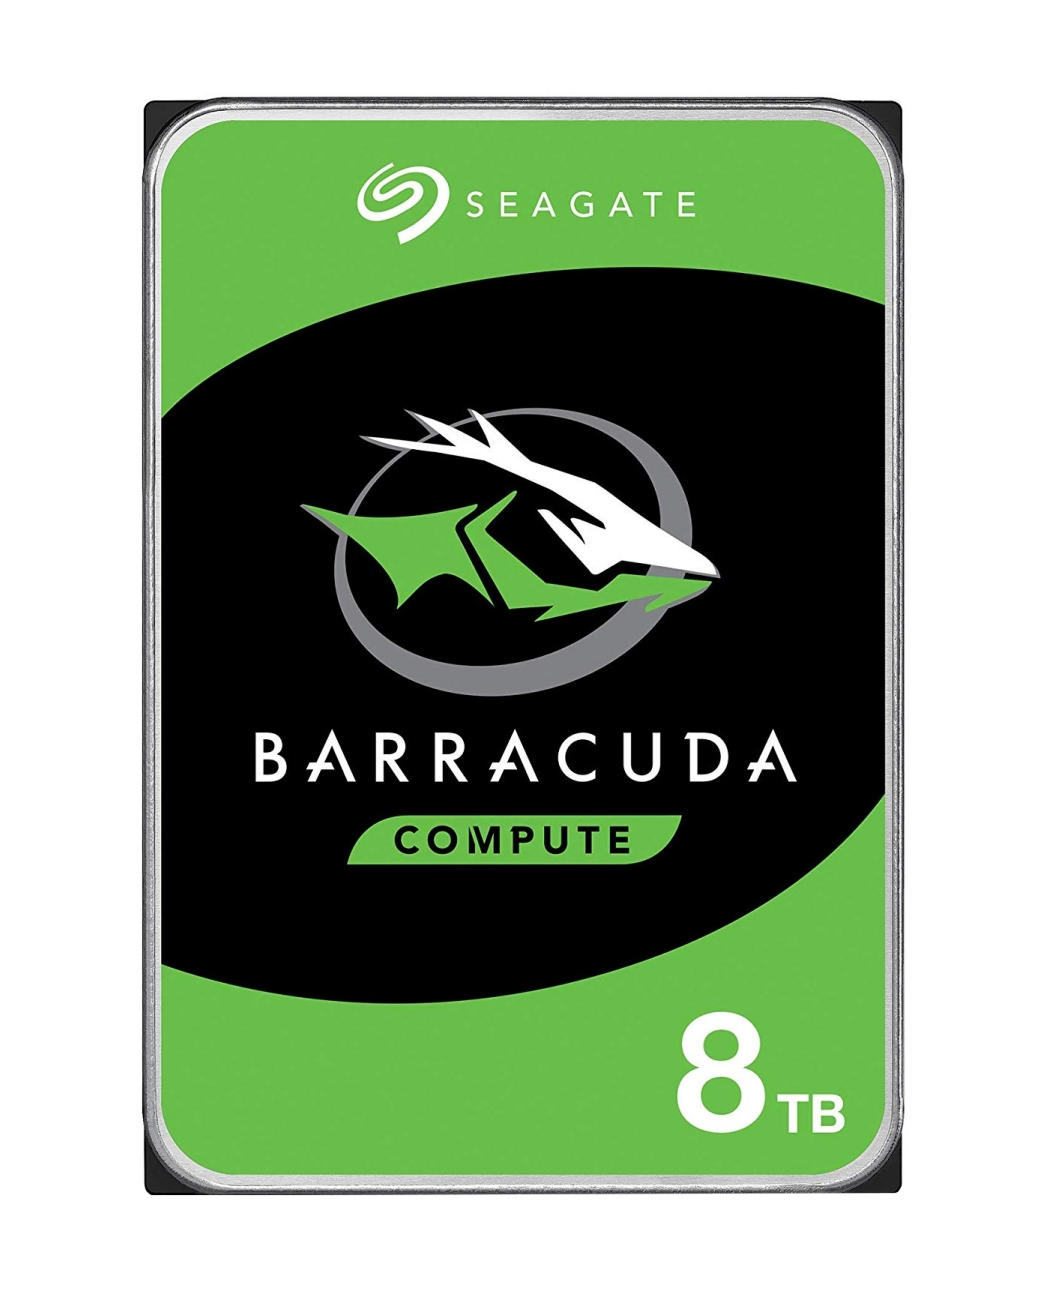 Seagate Barracuda ST8000DM004 8TB